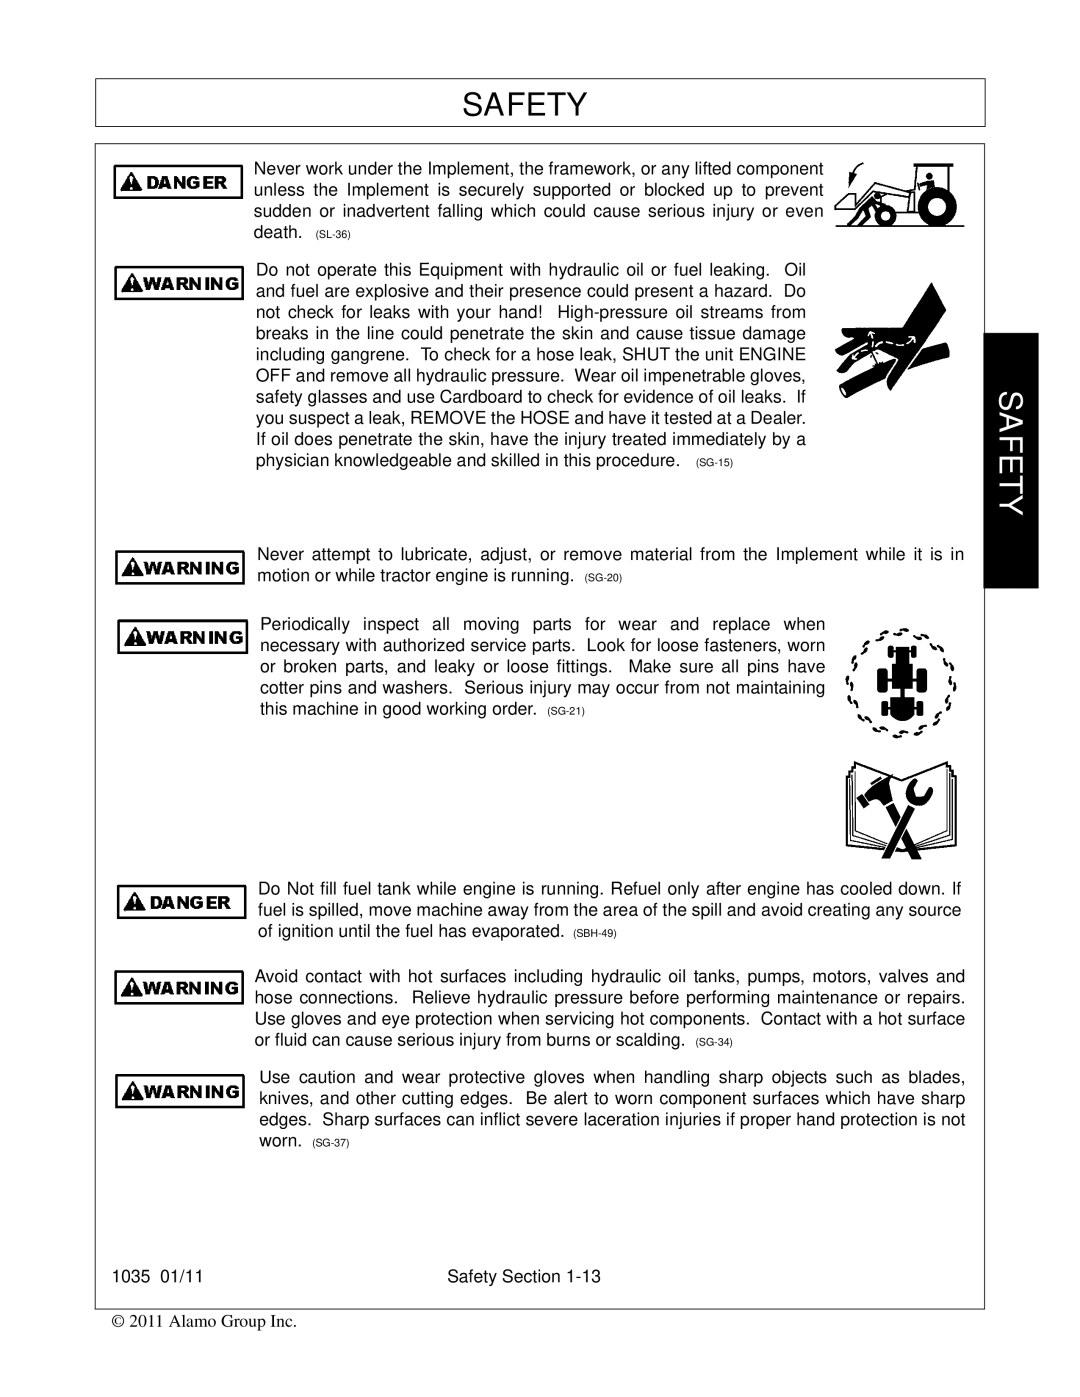 Bush Hog manual 1035 01/11 Safety Section 